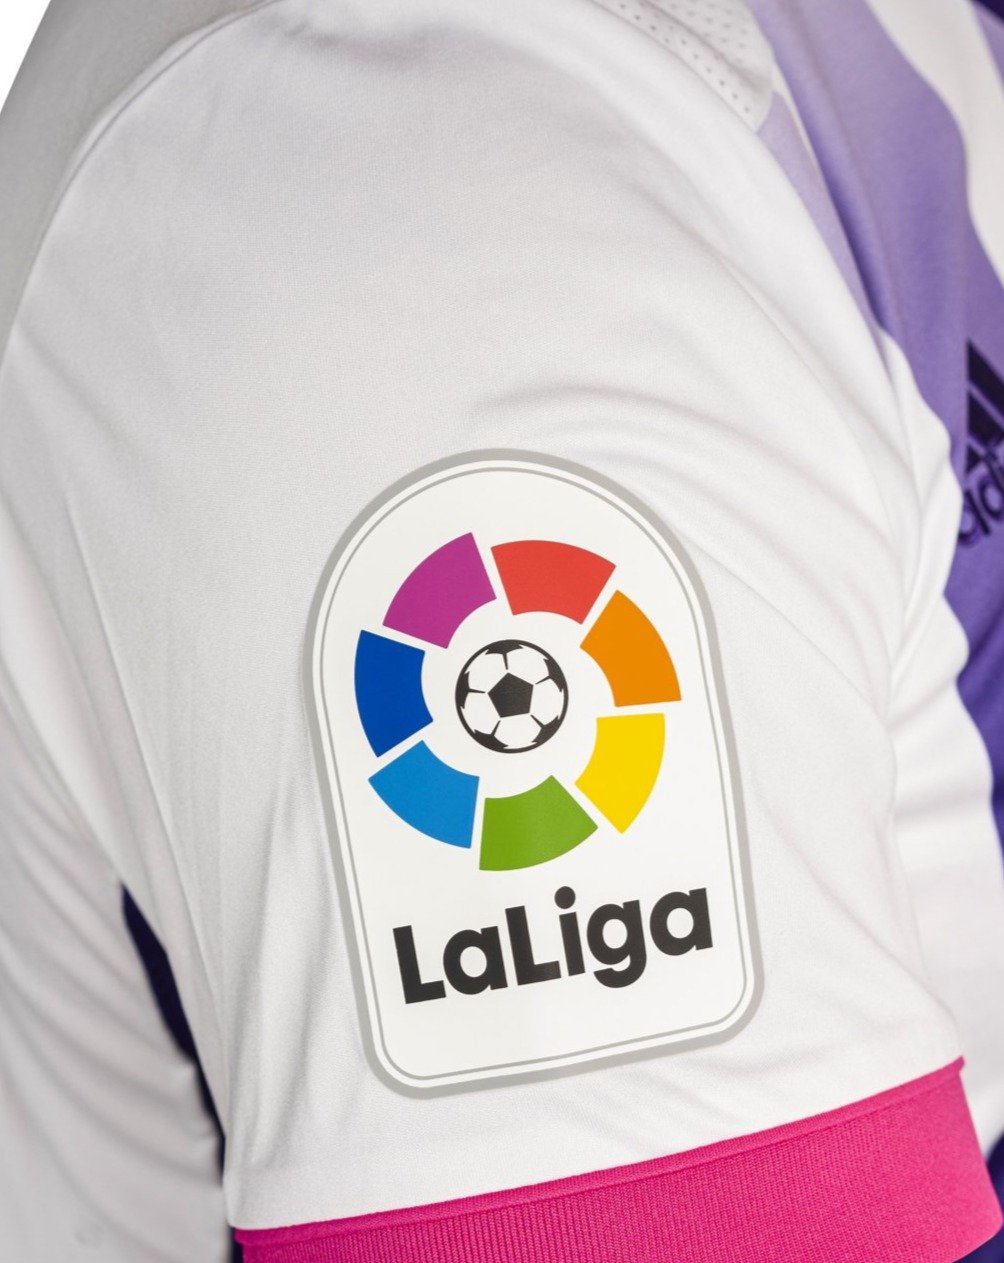 Real Valladolid 2020-21 Adidas Home Kit | 20/21 Kits | Football ...